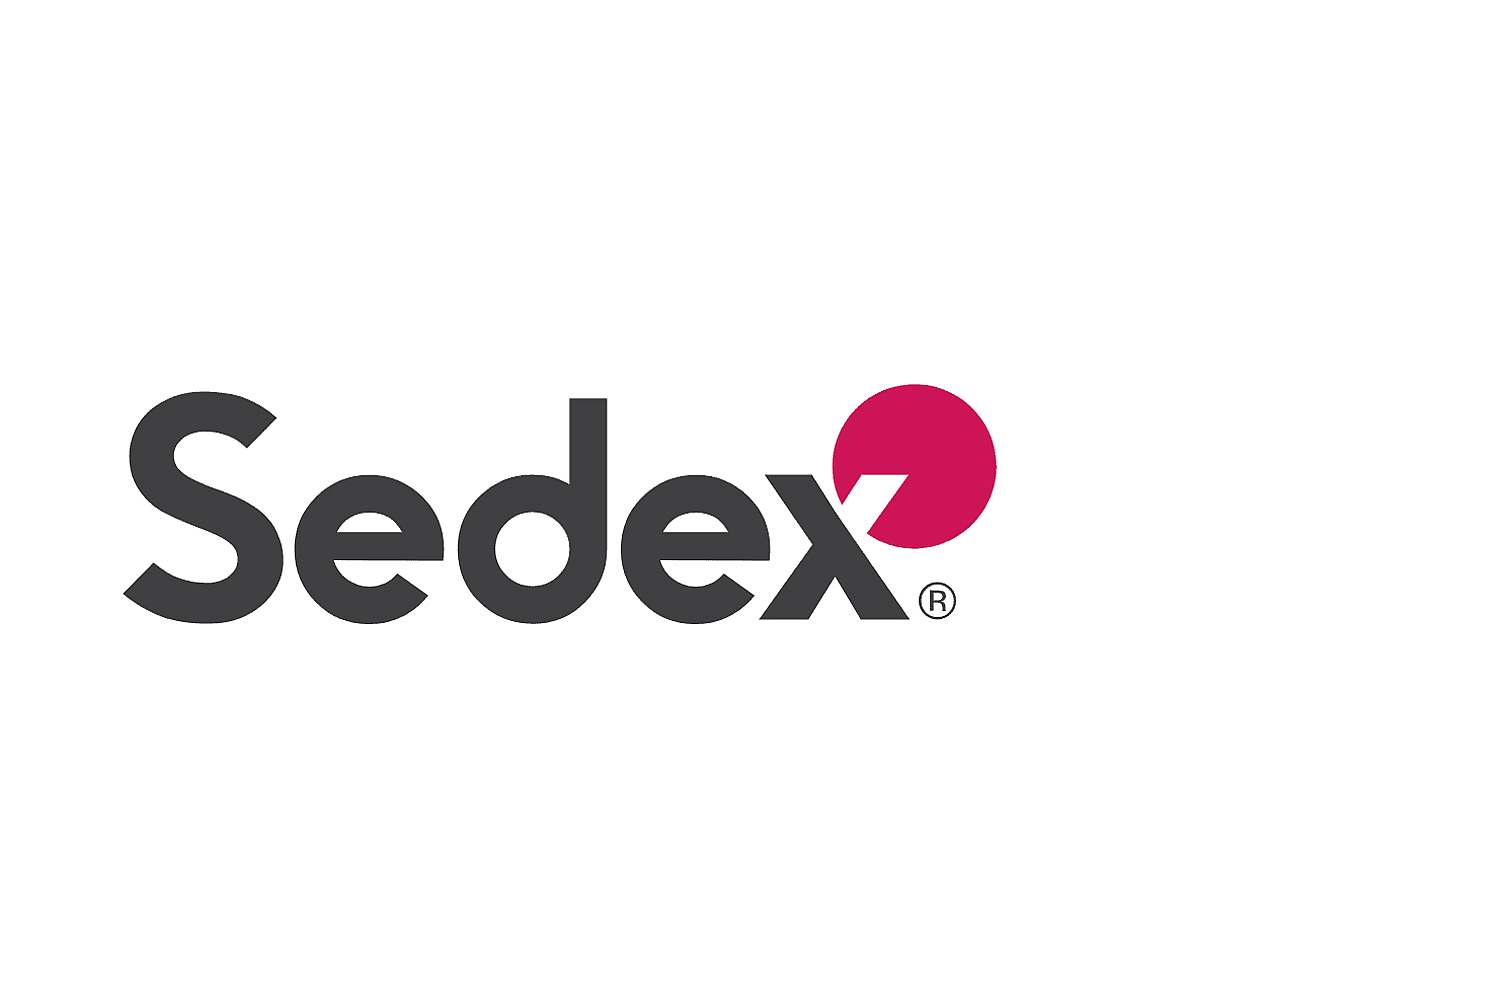 SEDEX Global (Supplier Ethical Data Exchange)